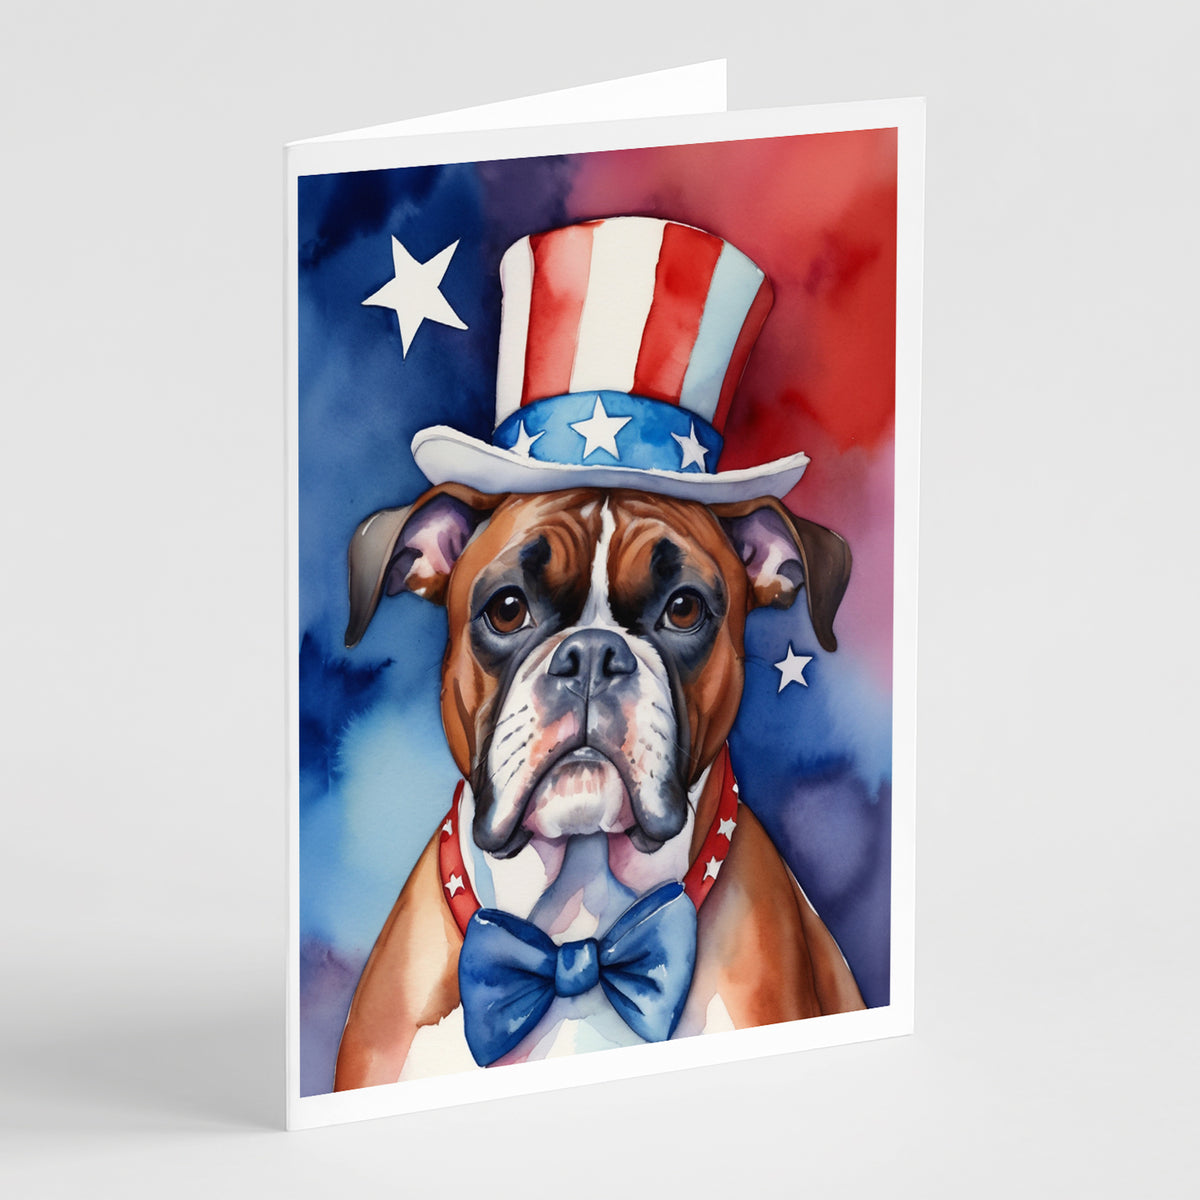 Buy this Boxer Patriotic American Greeting Cards Pack of 8